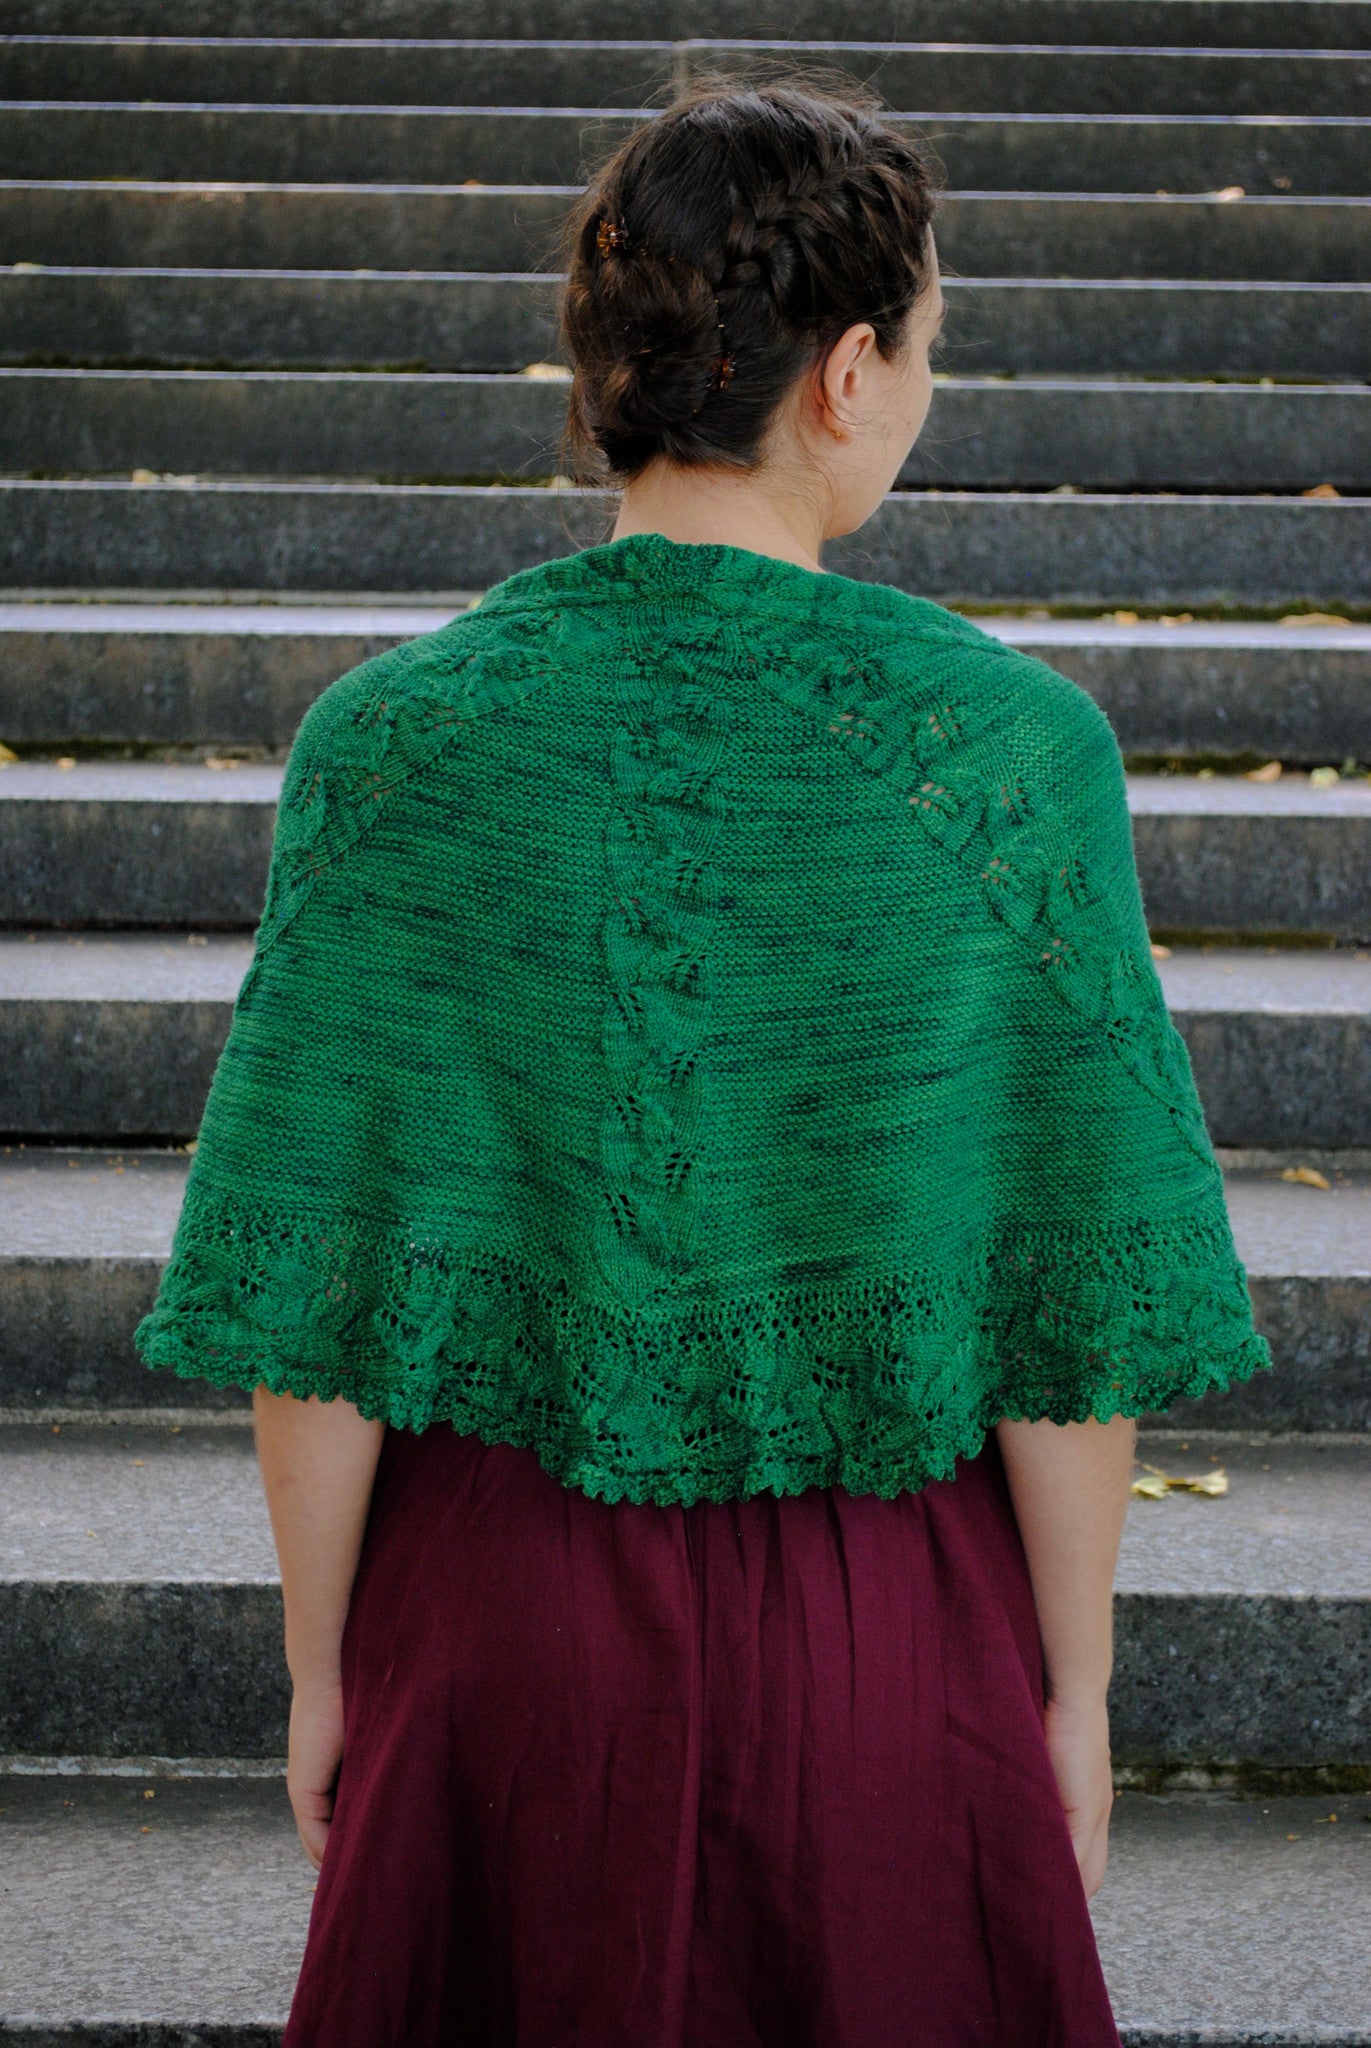 Medeina lace shawl pattern with leaf motifs